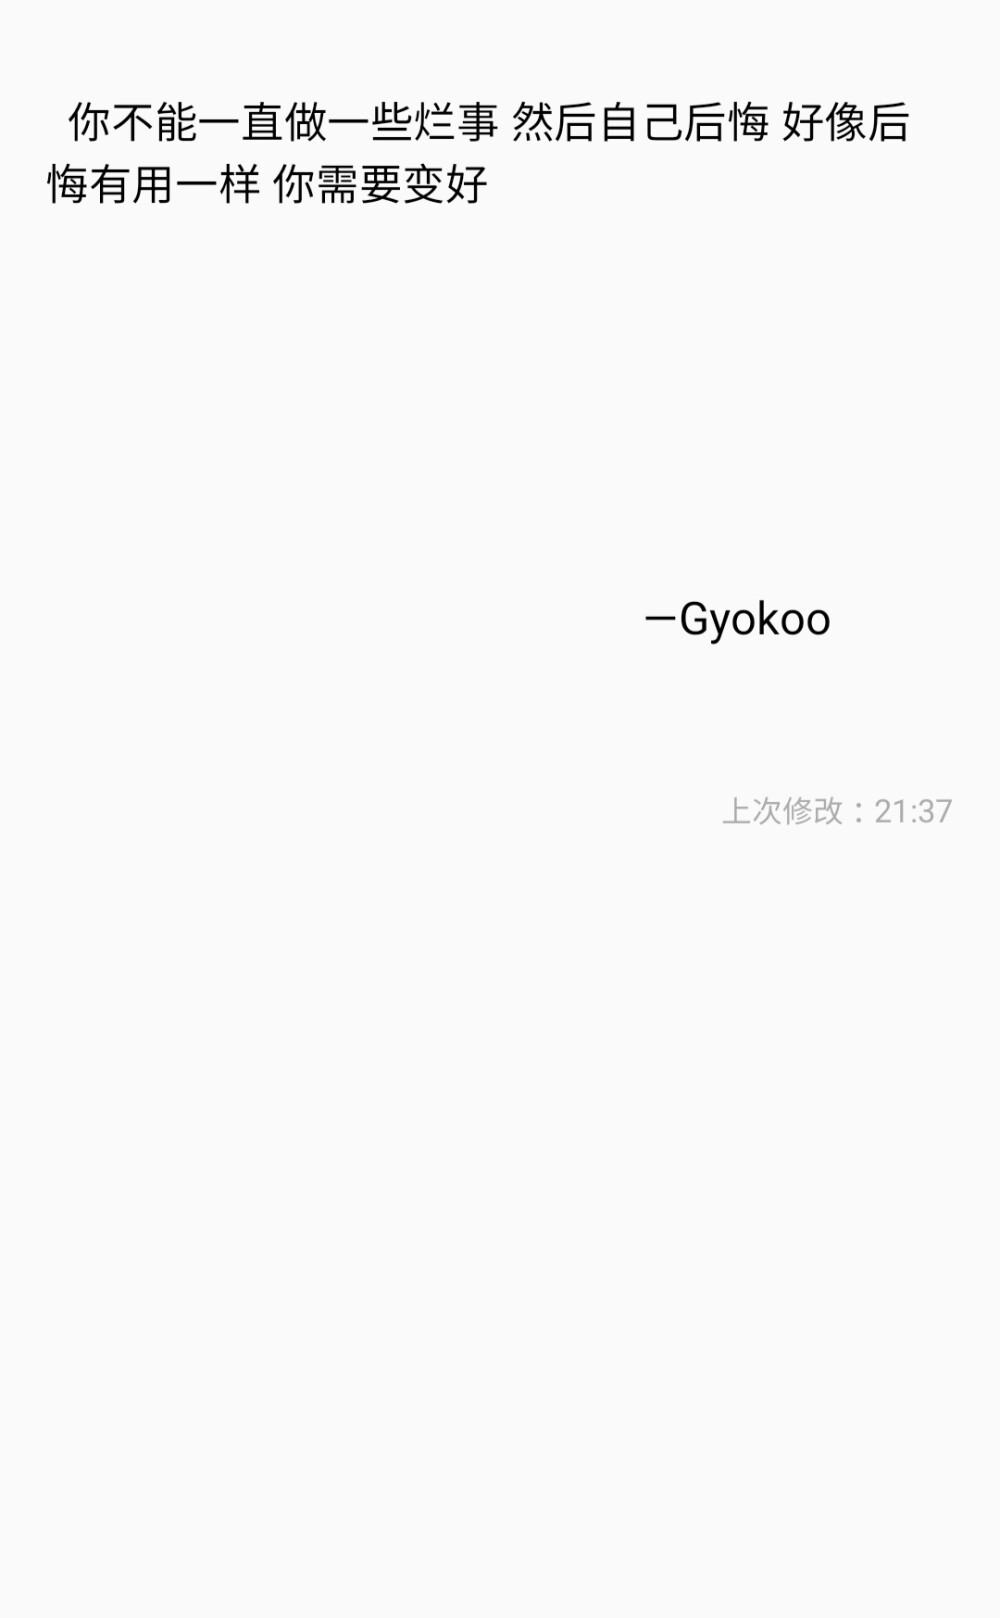 Gyokooの备忘录 歌词 手写句子 英文 背景图片 